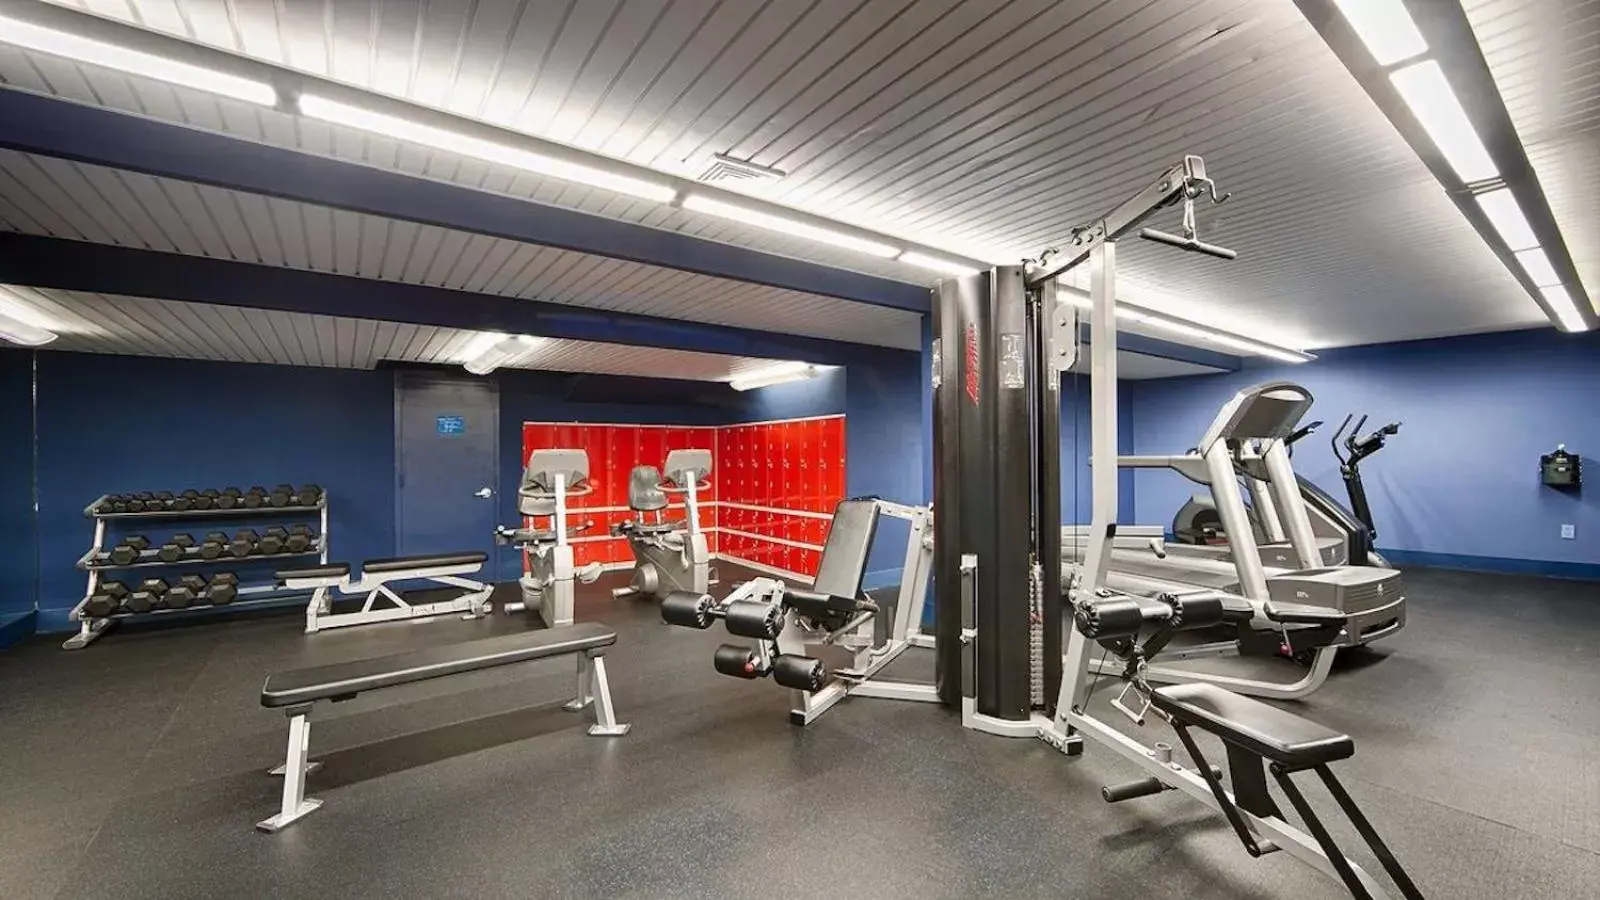 Fitness centre/facilities, Fitness Center/Facilities in Robert Treat Hotel